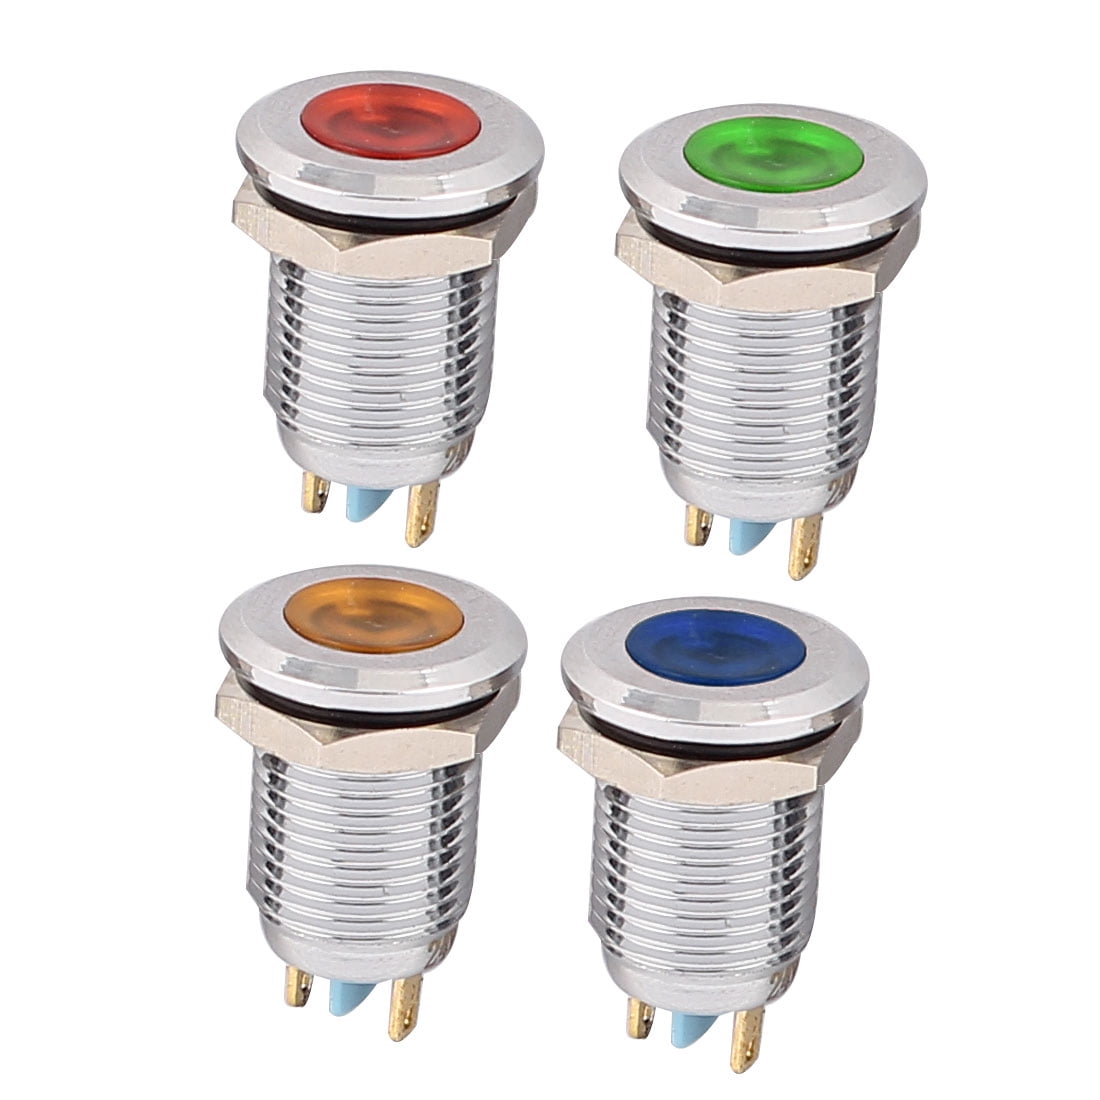 5Pcs AC110V 22mm Thread LED for Electronic Indicator Signal Light Five color 